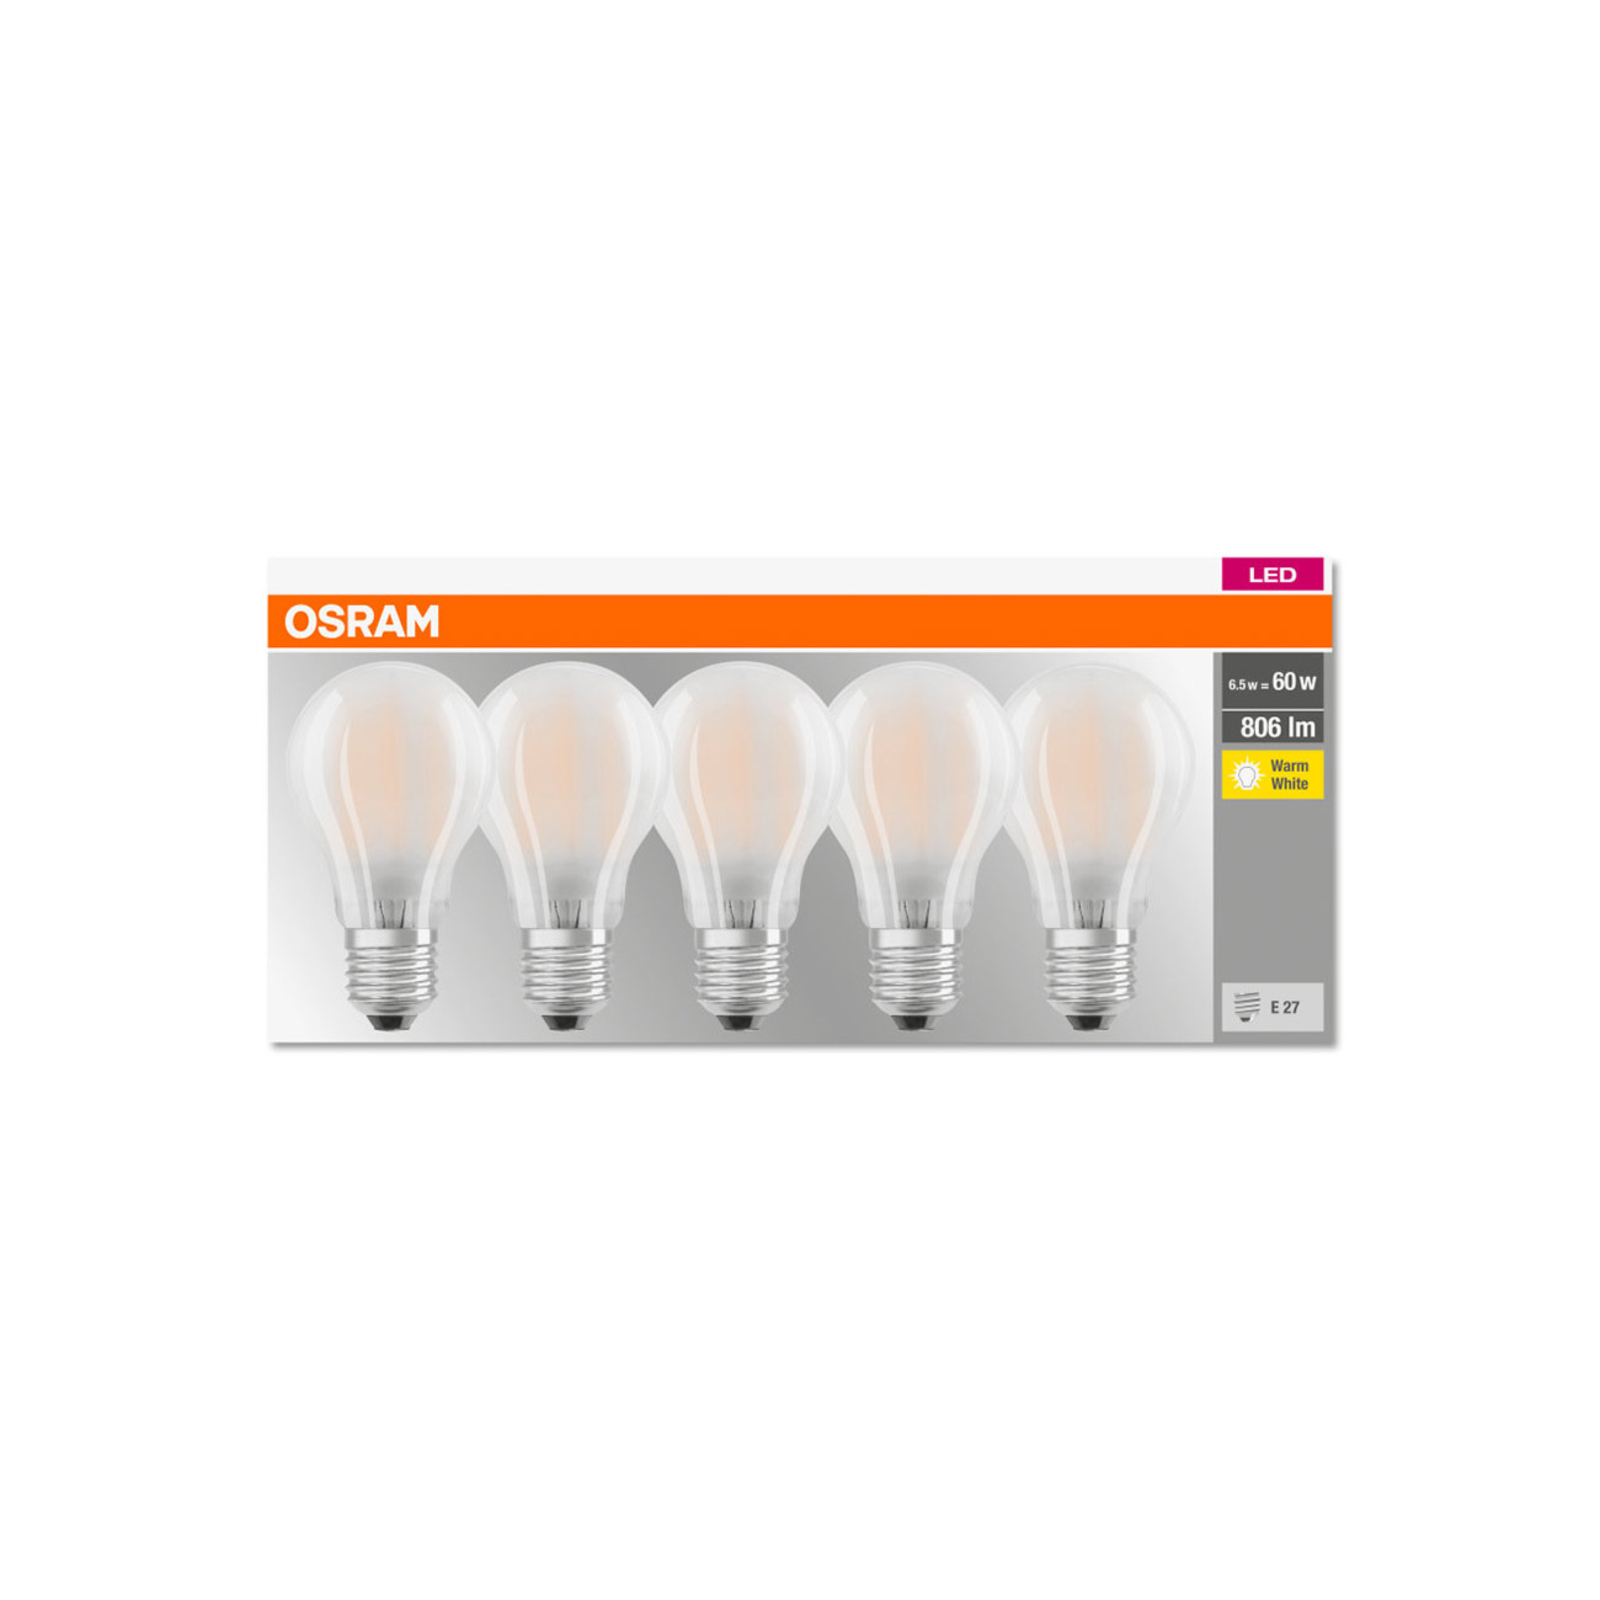 OSRAM LED lamp Classic E27 7W 2.700K 806lm per 5